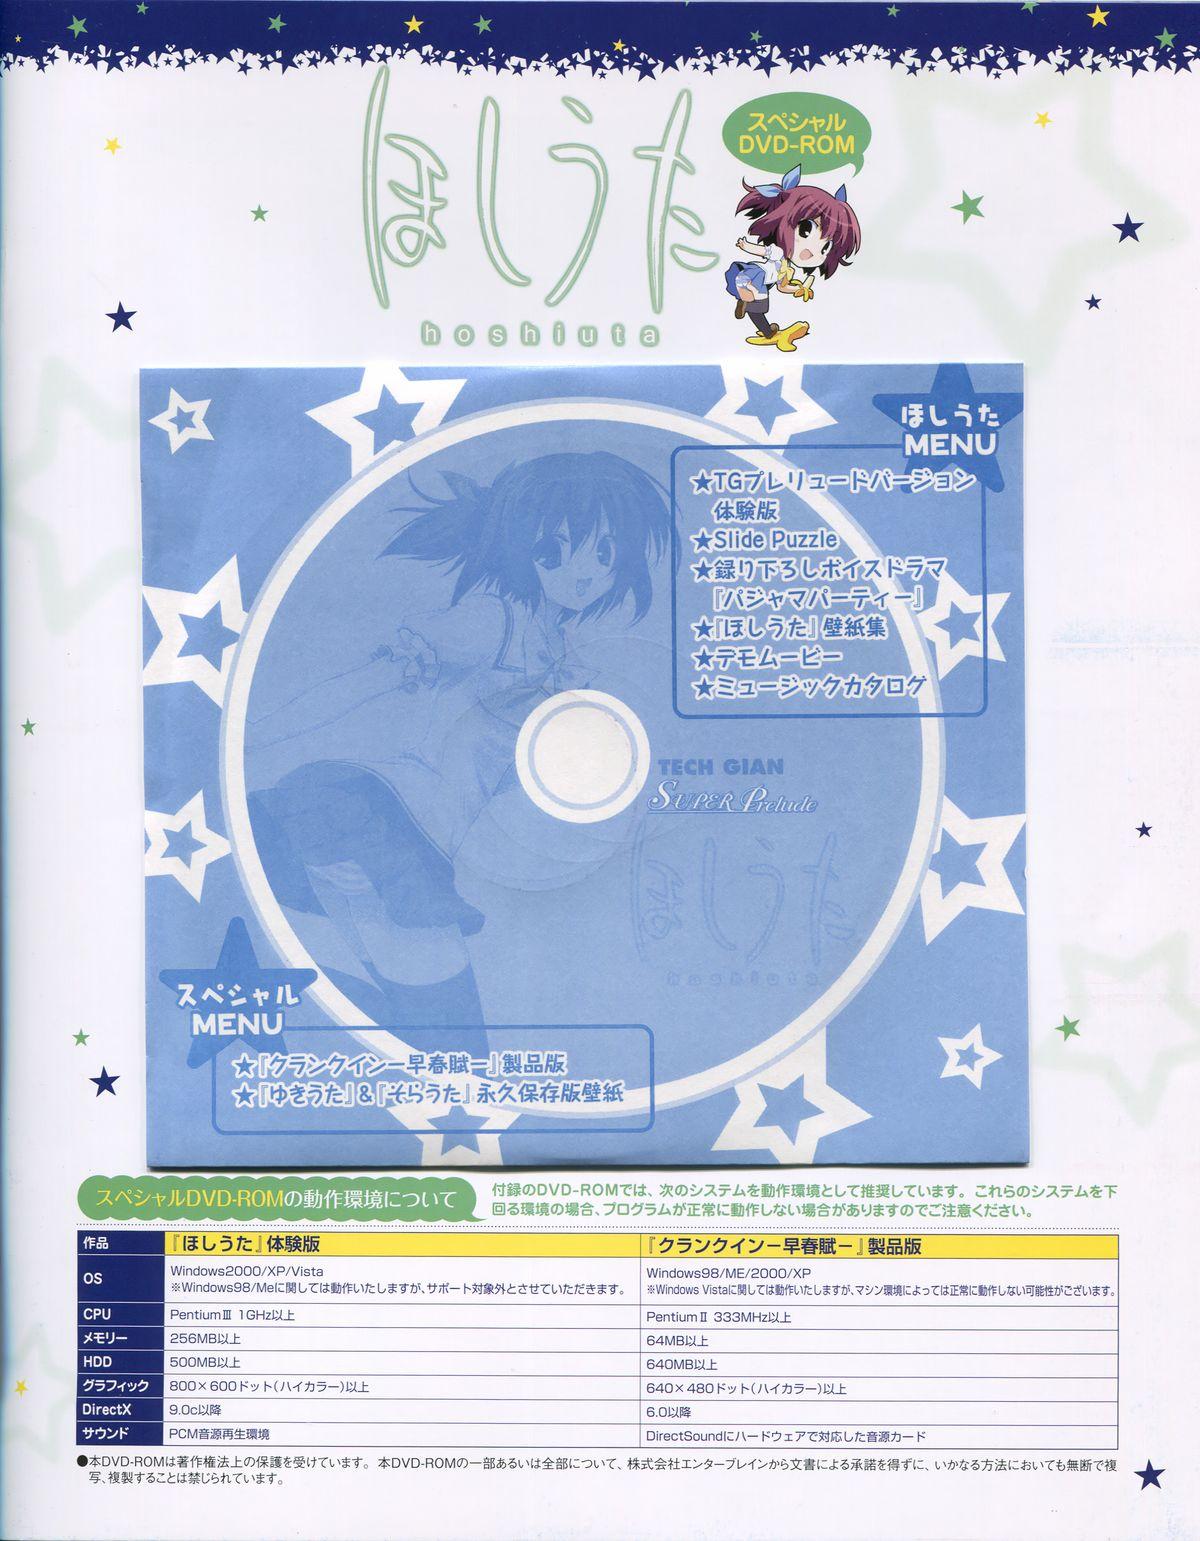 TECH GIAN Super Prelude hoshiuta with DVD-Rom 3